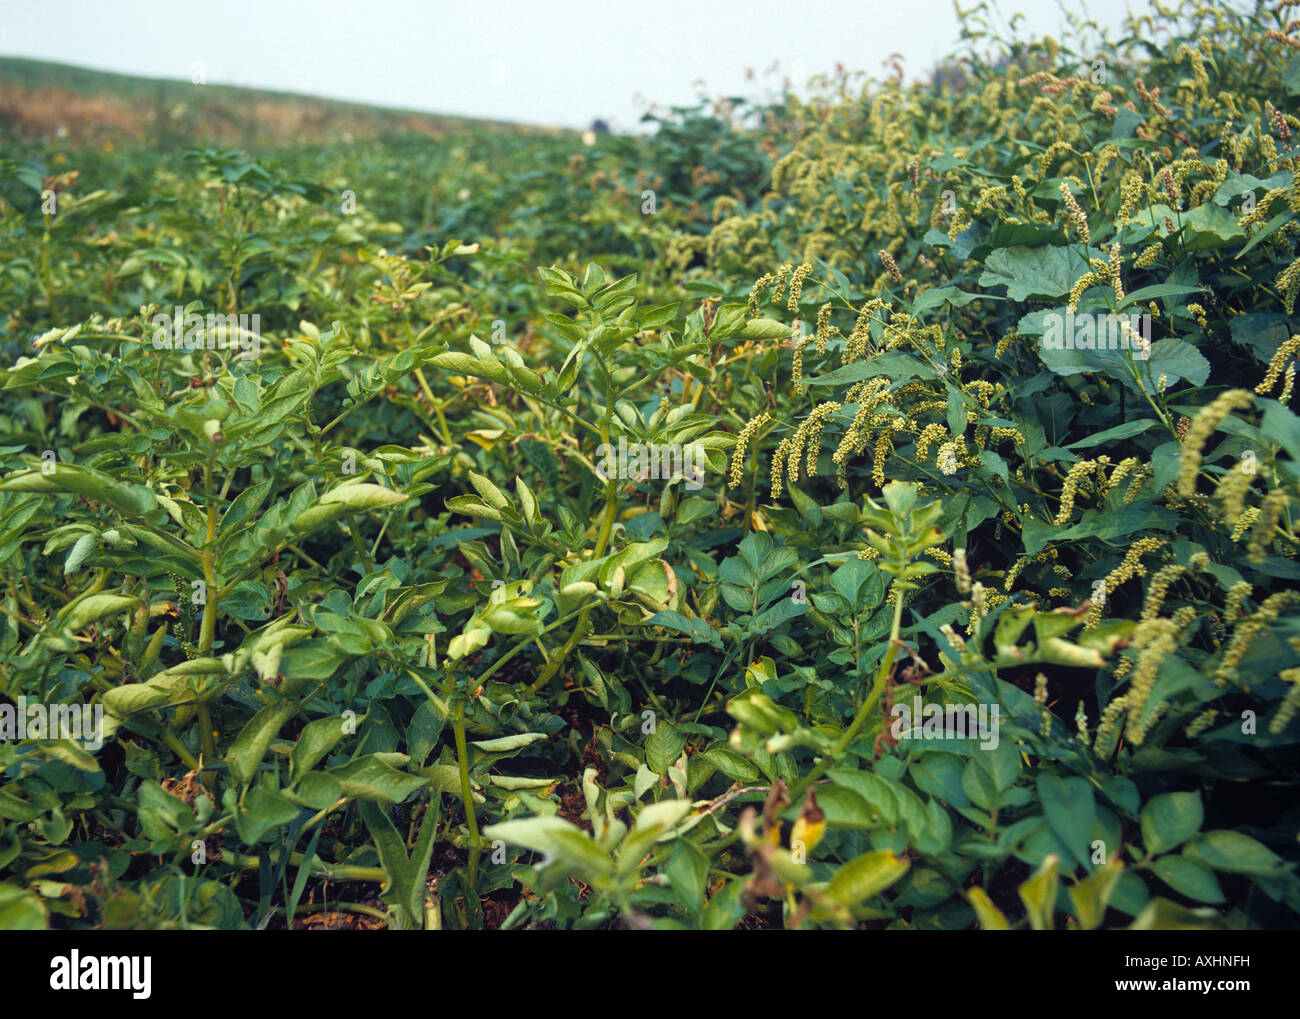 Redshank Polygonum persicaria flowering annual weeds in a maturing potato crop Stock Photo